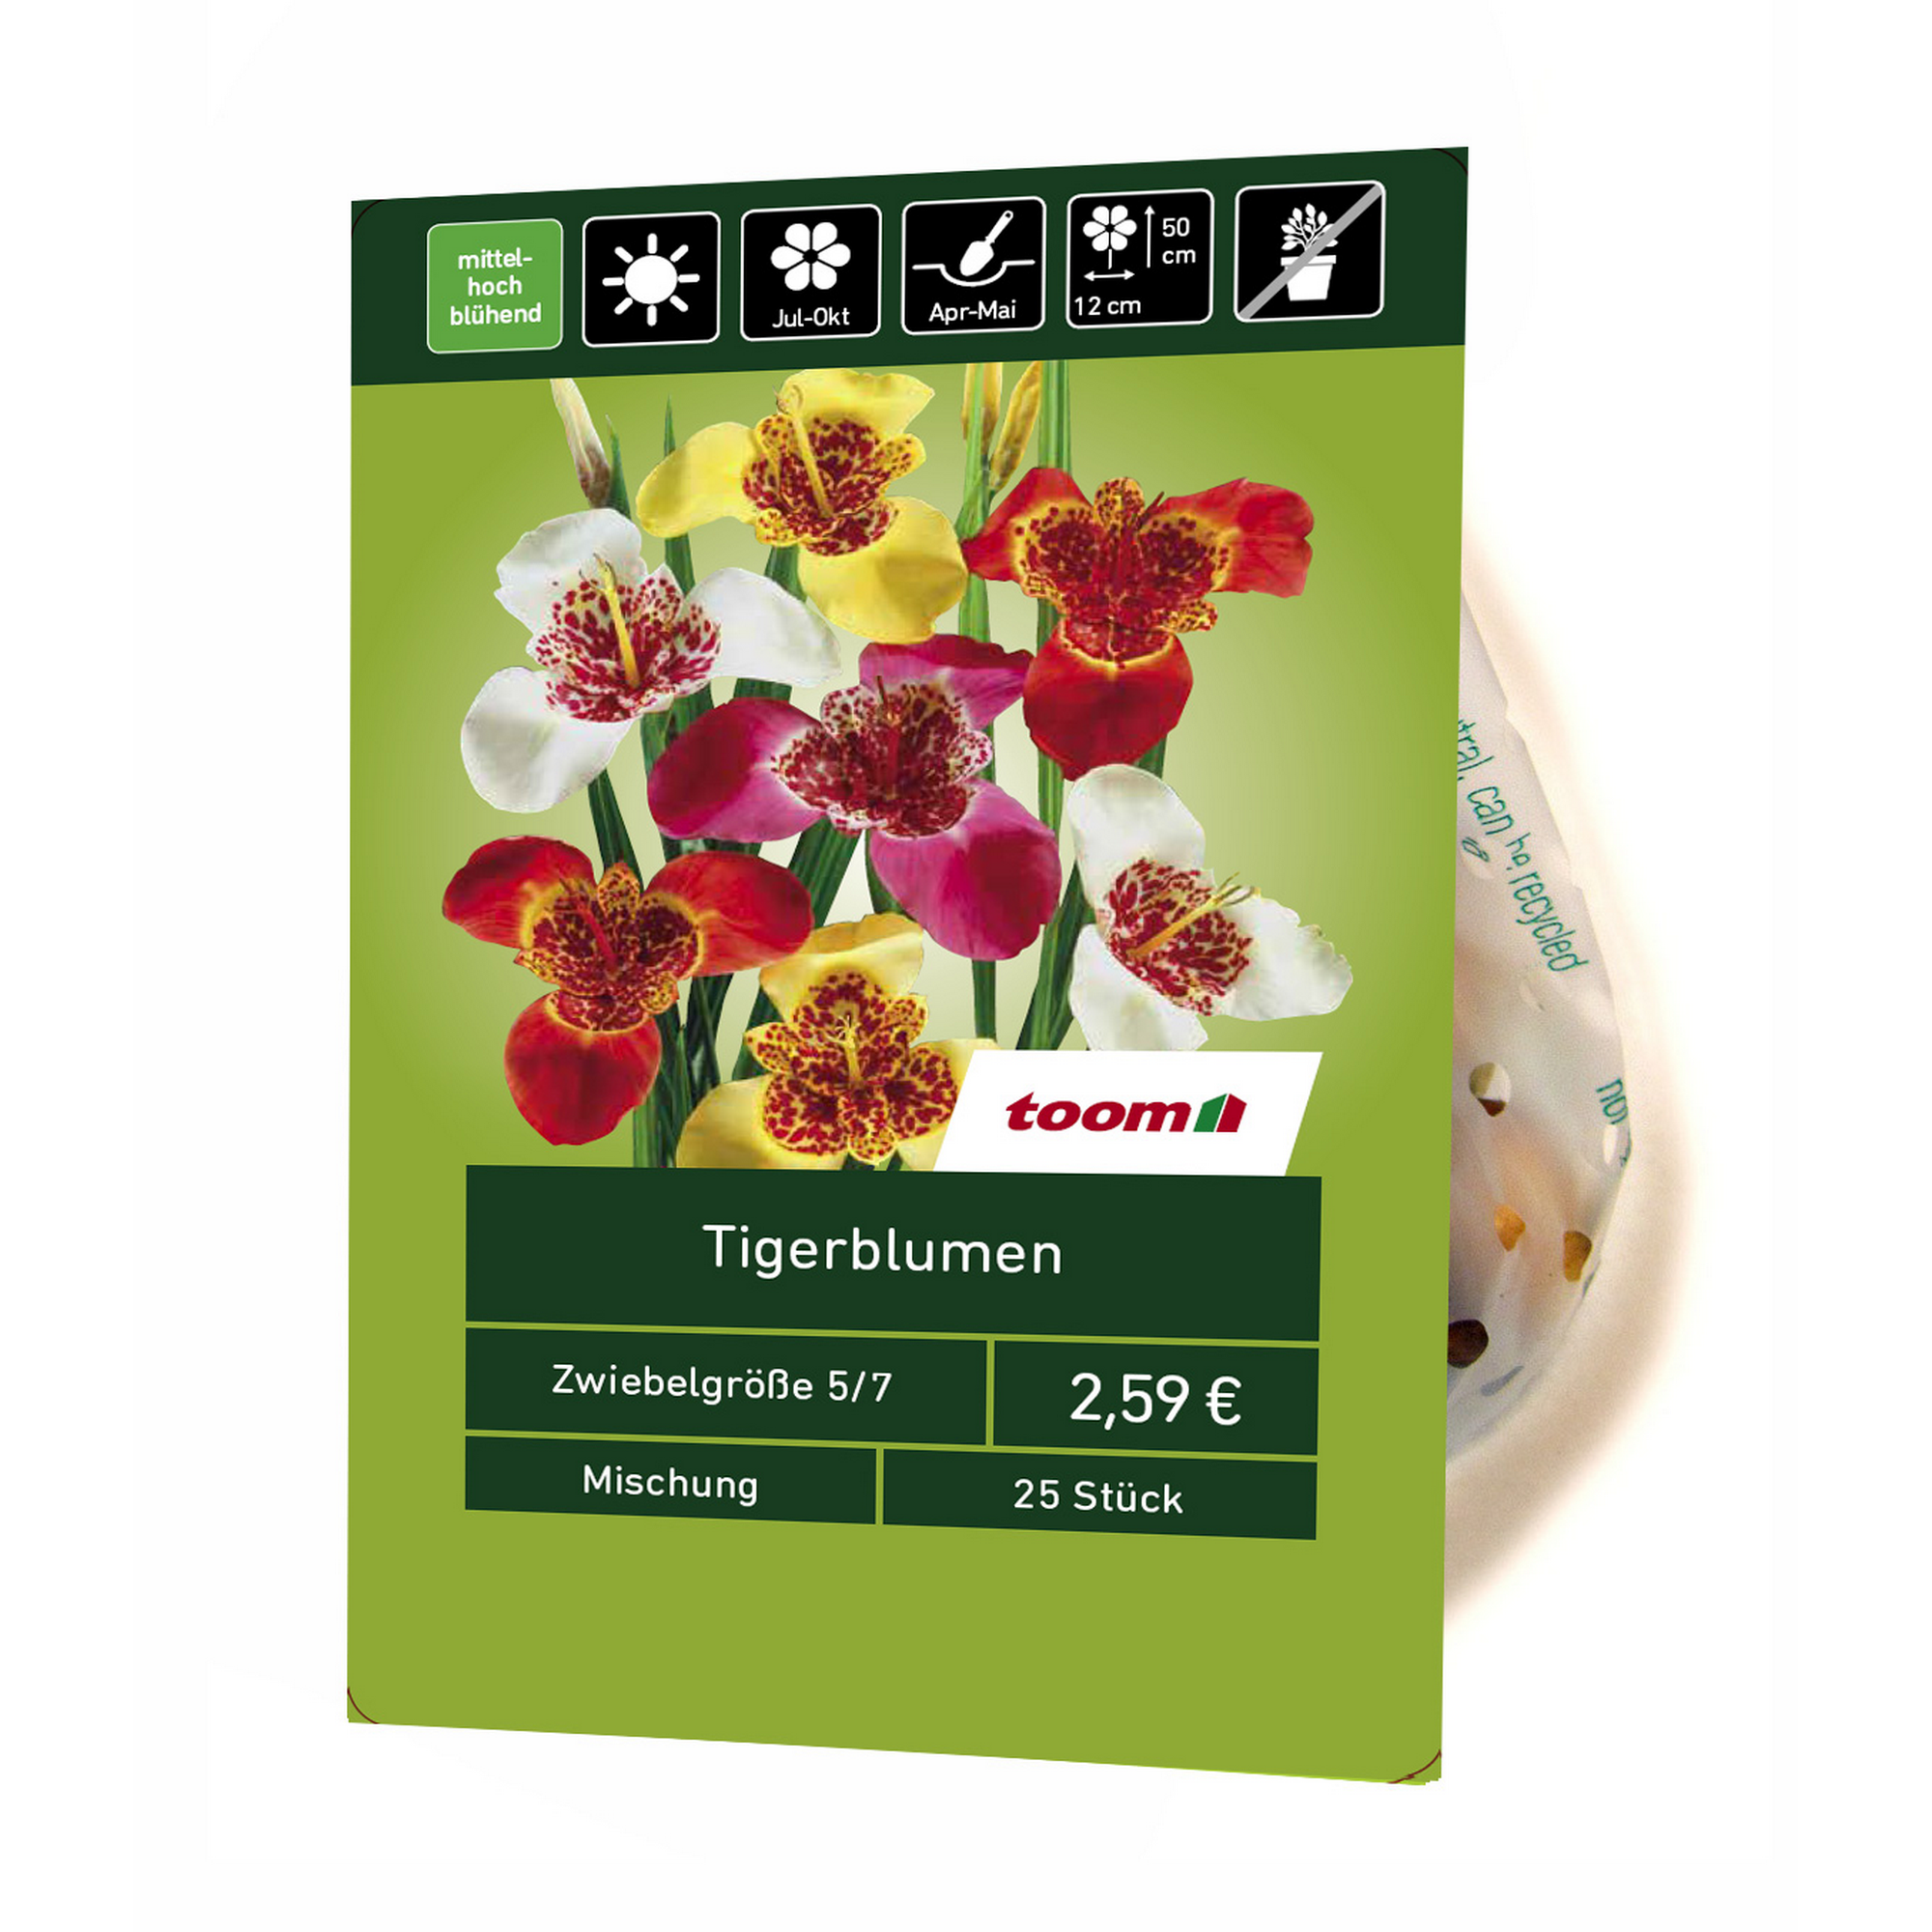 Tigerblumen-Mix 25 Stück + product picture